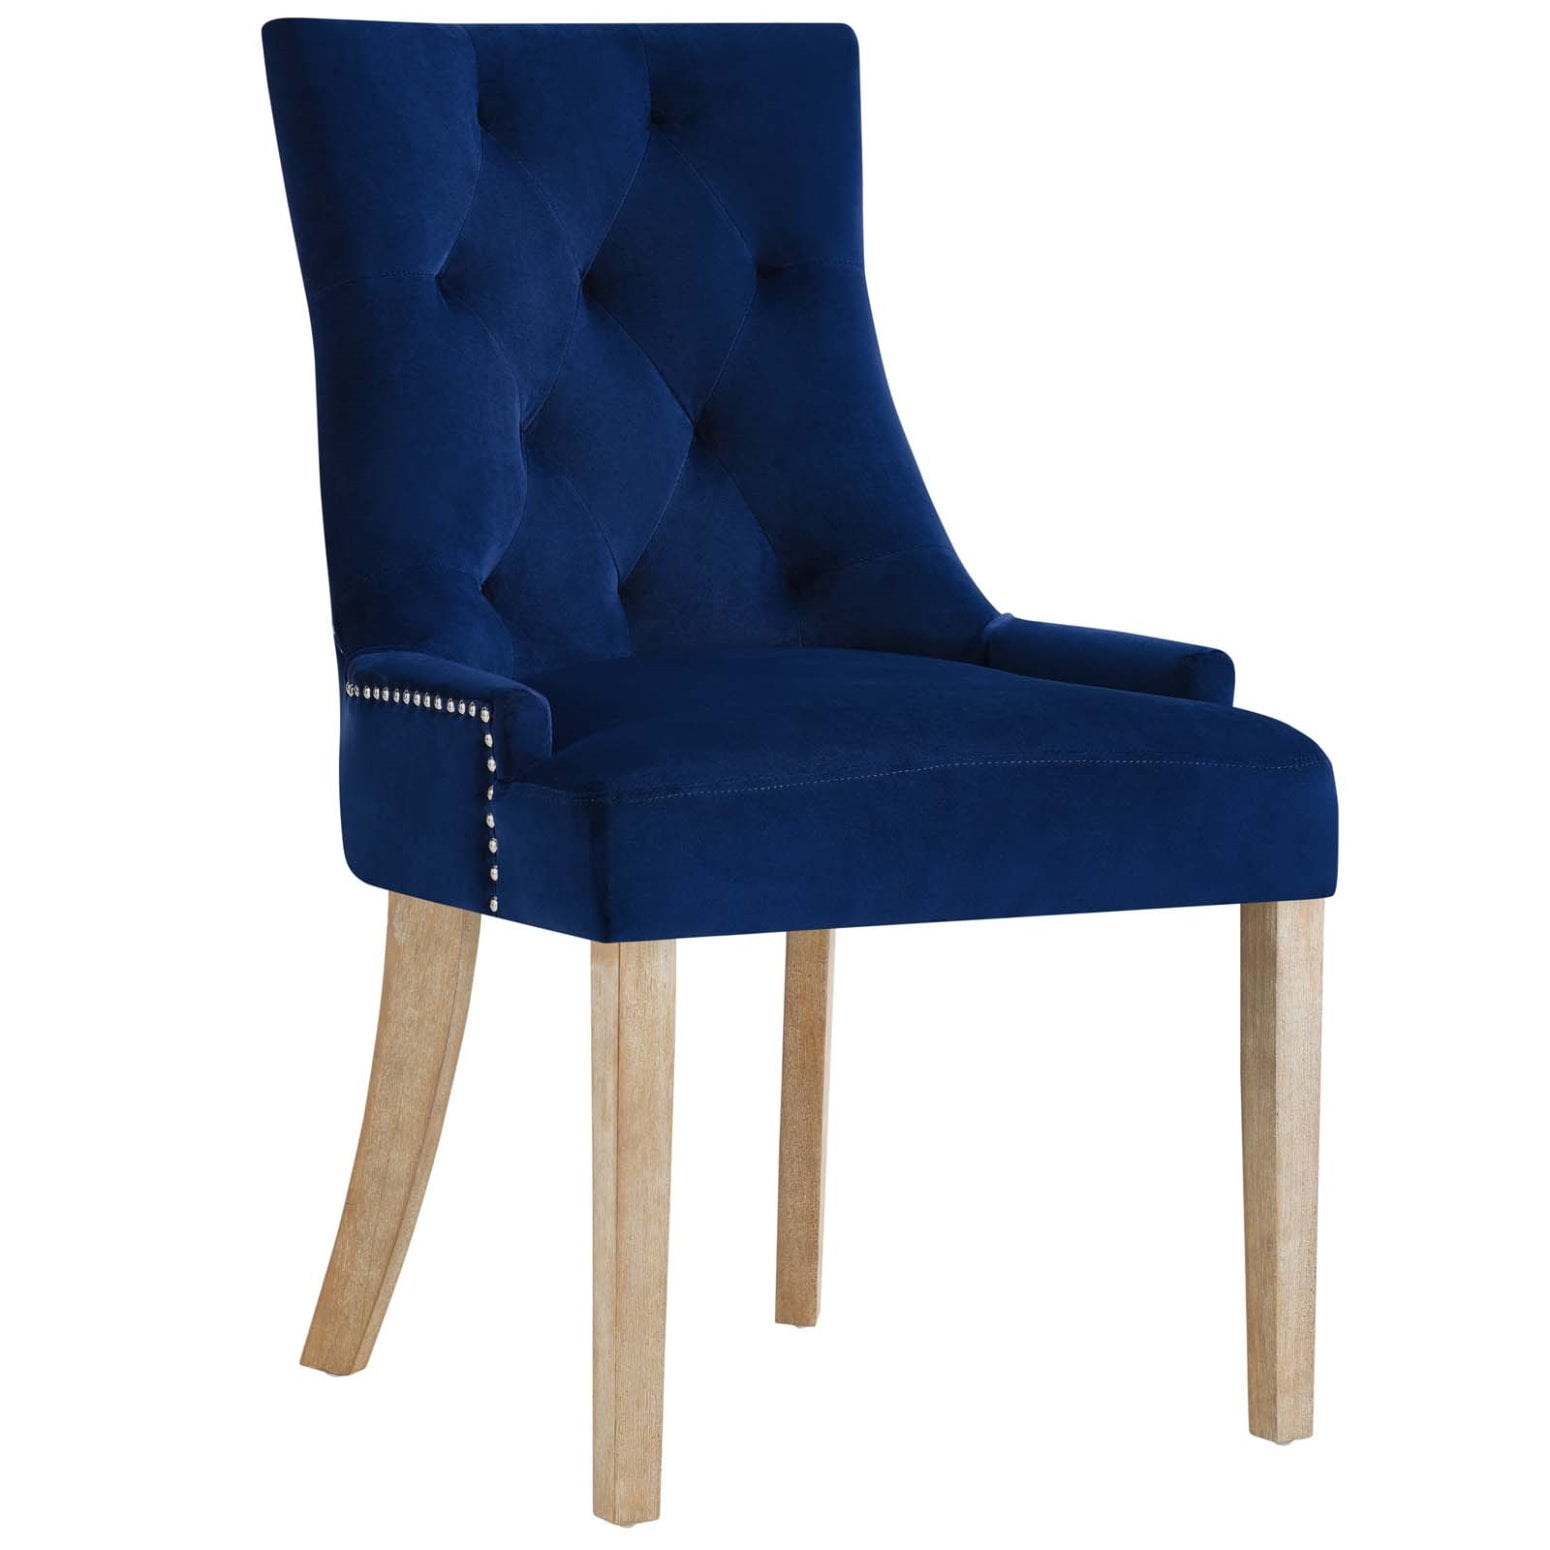 Modern Contemporary Urban Design Kitchen Room Dining Chair, Navy Blue ...